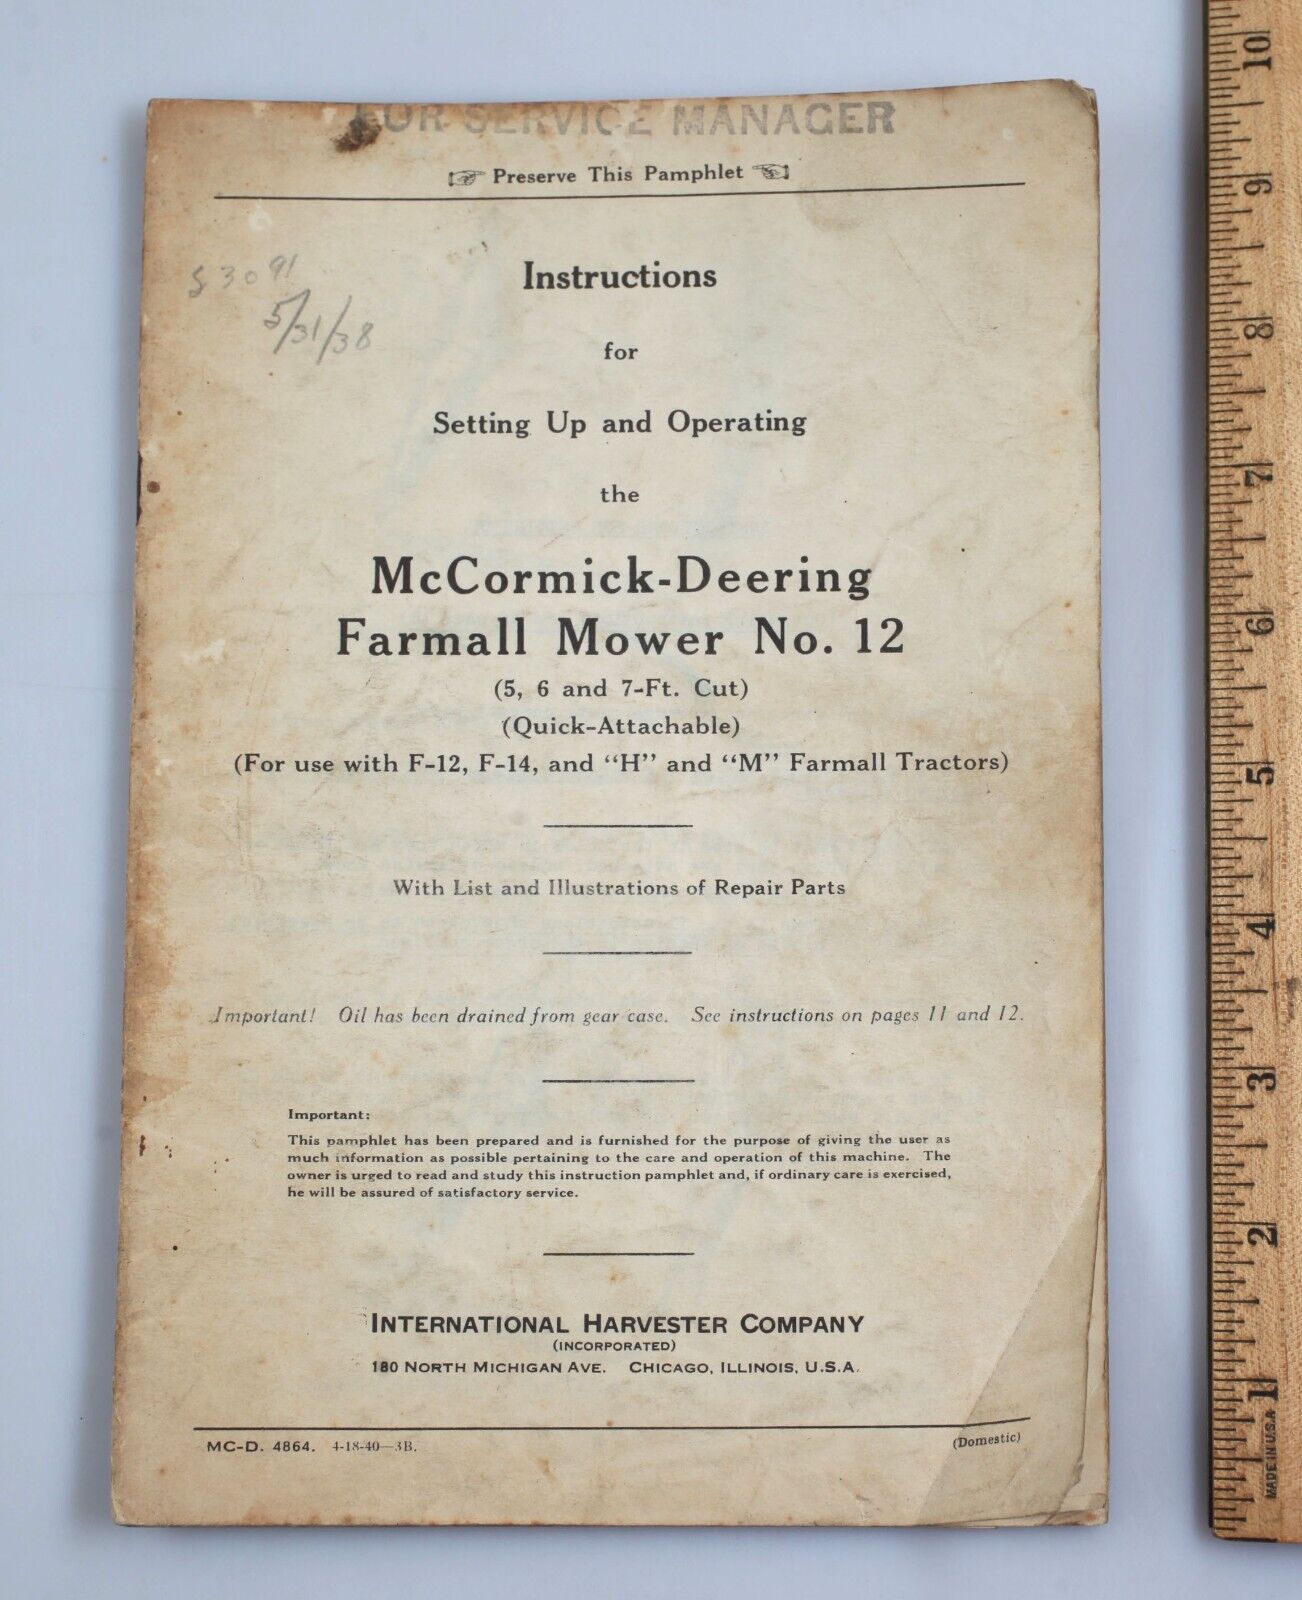 1940 International Harvester McCormick Deering Farmall Mower No. 12 Manual